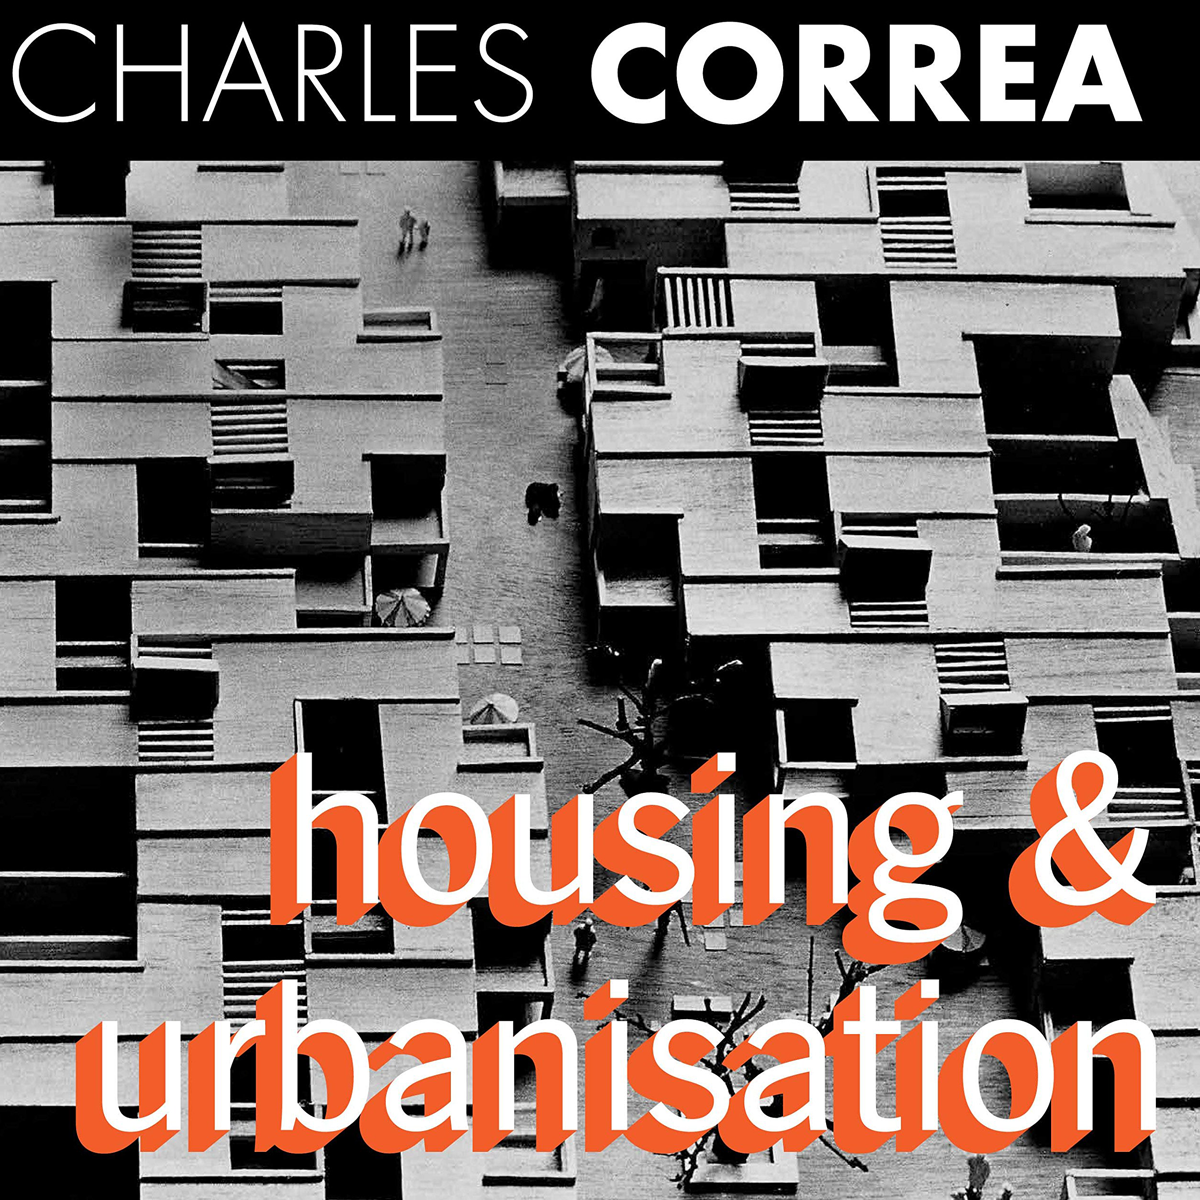 Charles Correa: Housing and Urbanisation